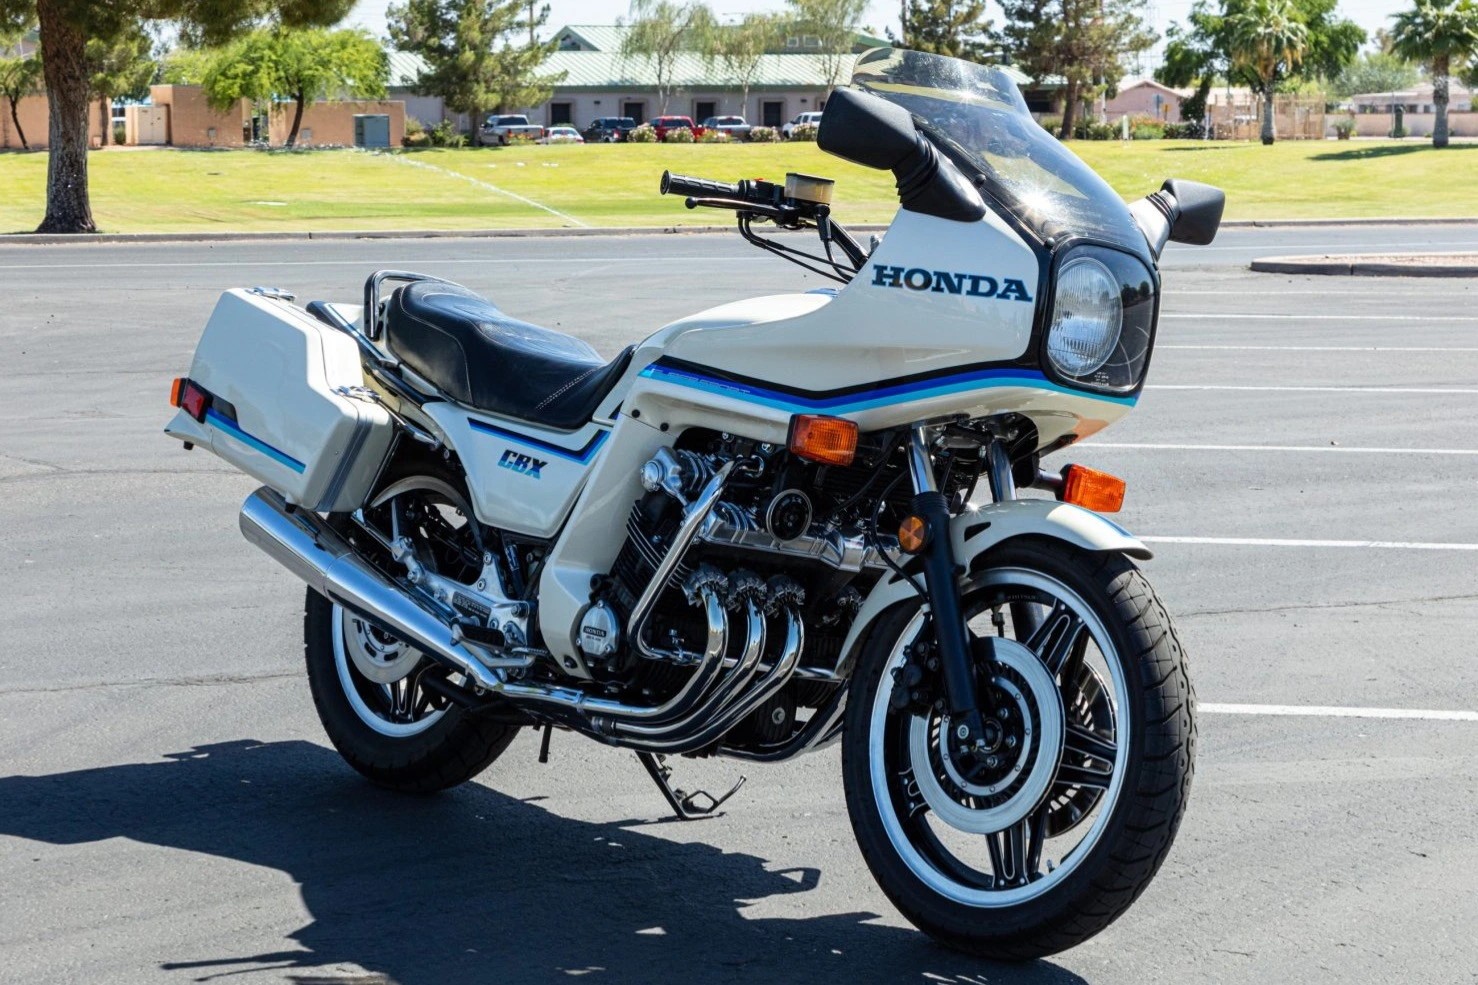 1982 Honda CBX 1050 for Sale in Highland, CA - OfferUp